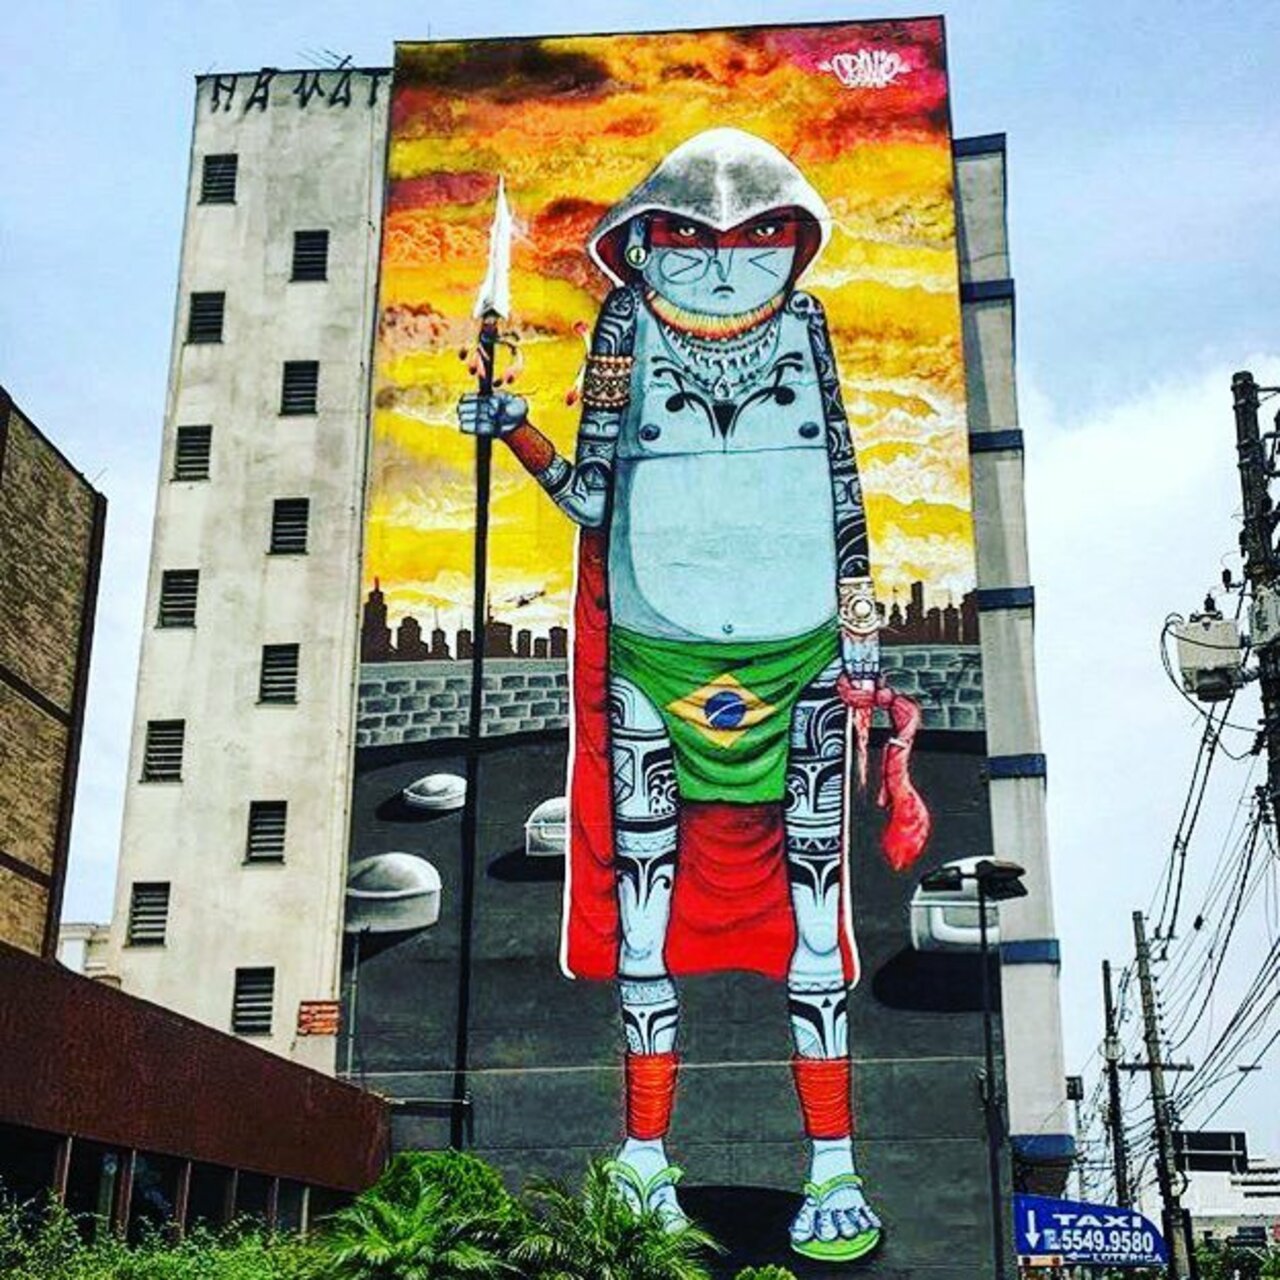 RT @oflaviomaluf: A new mural by Cranio @cranioartes in Sampa, Brazil.  #streetart #graffiti #art #urban #urbanart #museum #artsy #ar… https://t.co/AGPMmGpGw4